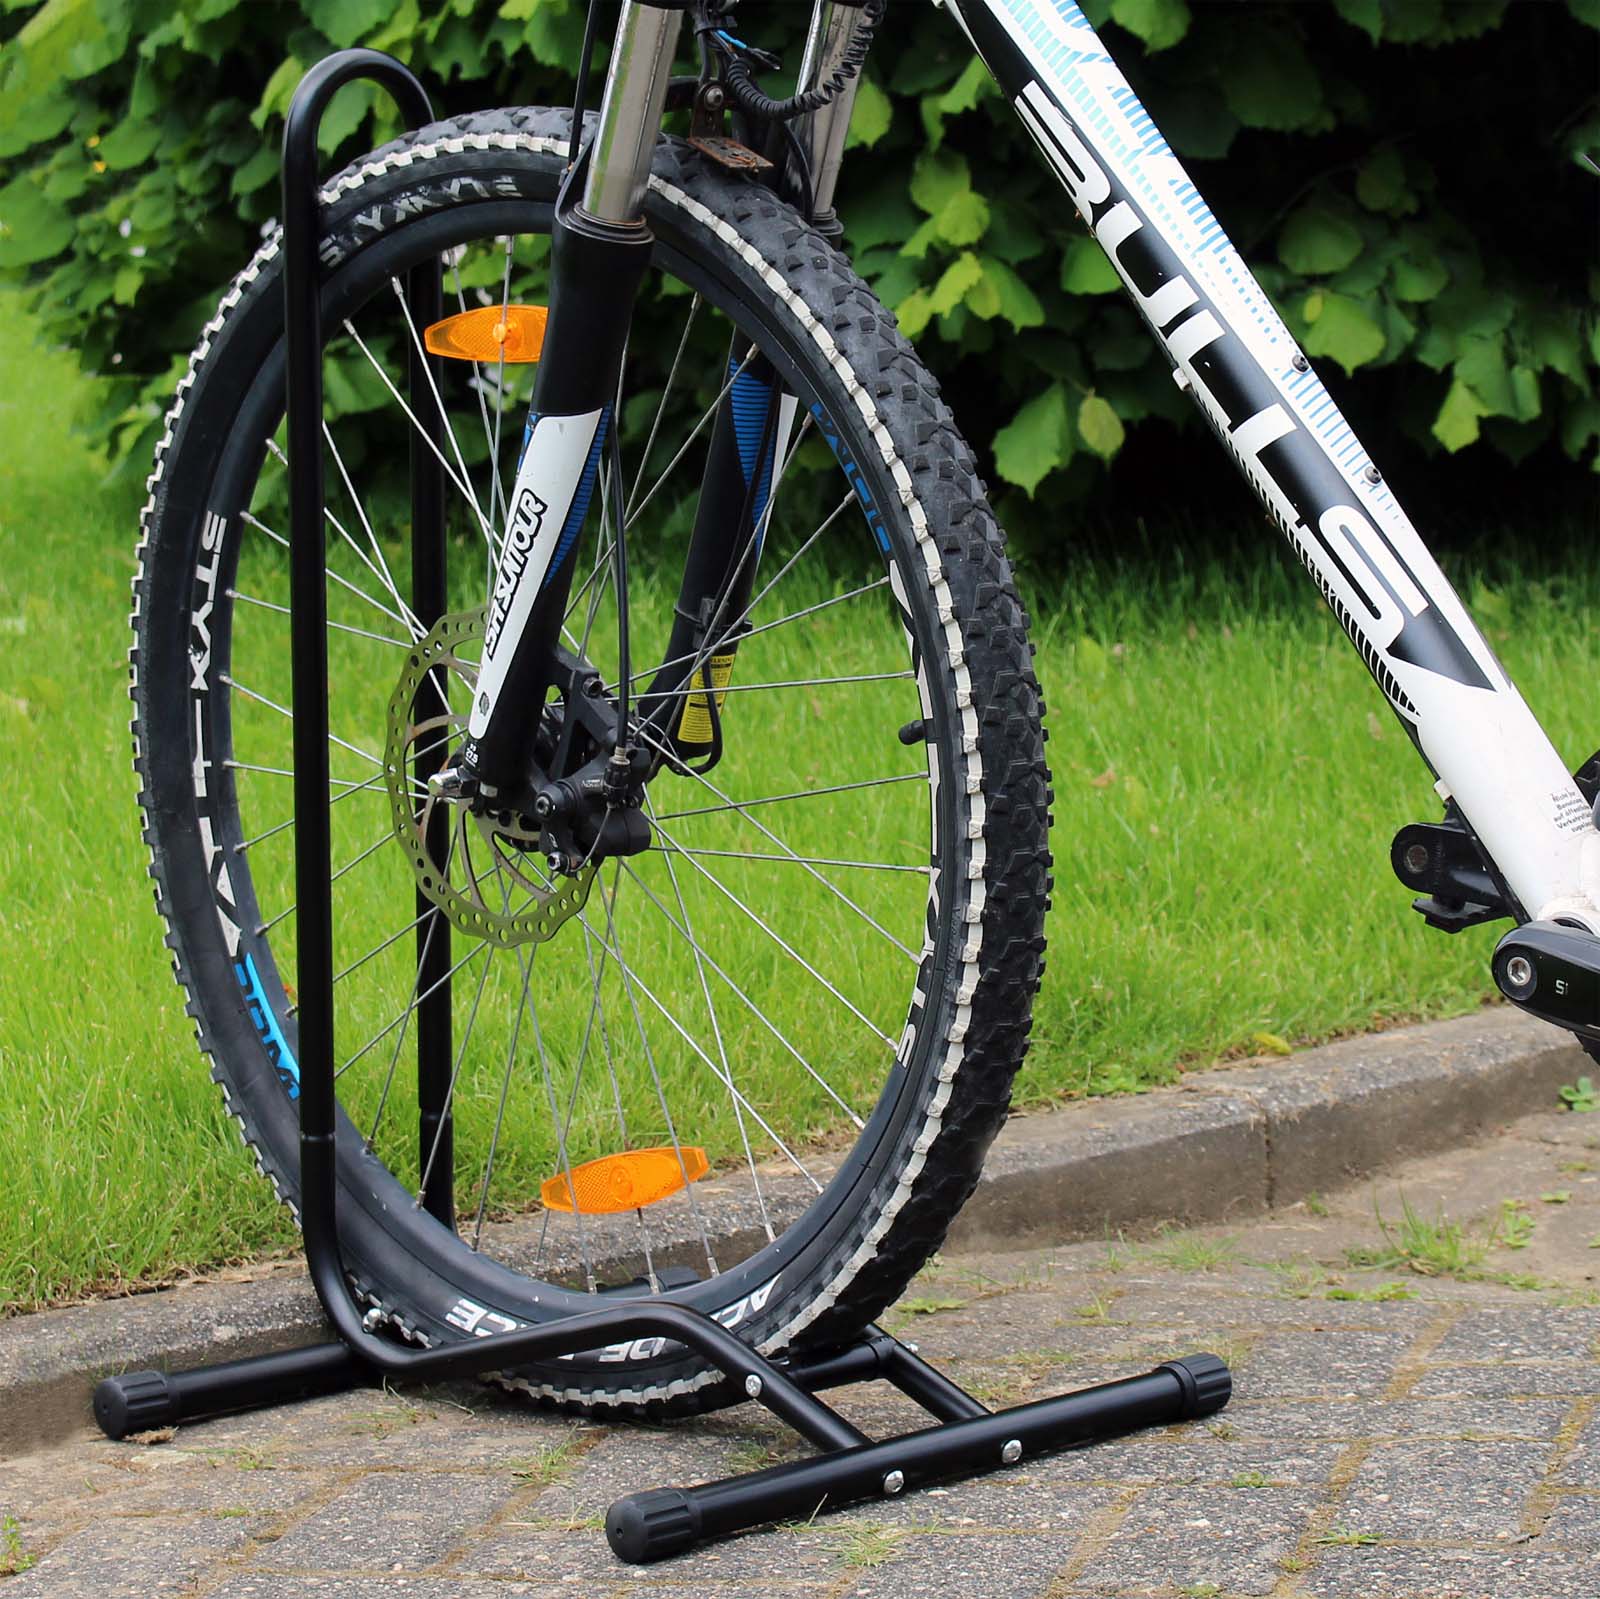 Toboli Soporte para aparcar bicicletas portátil suelo para 1 bicicleta  ancho de neumáticos 60mm